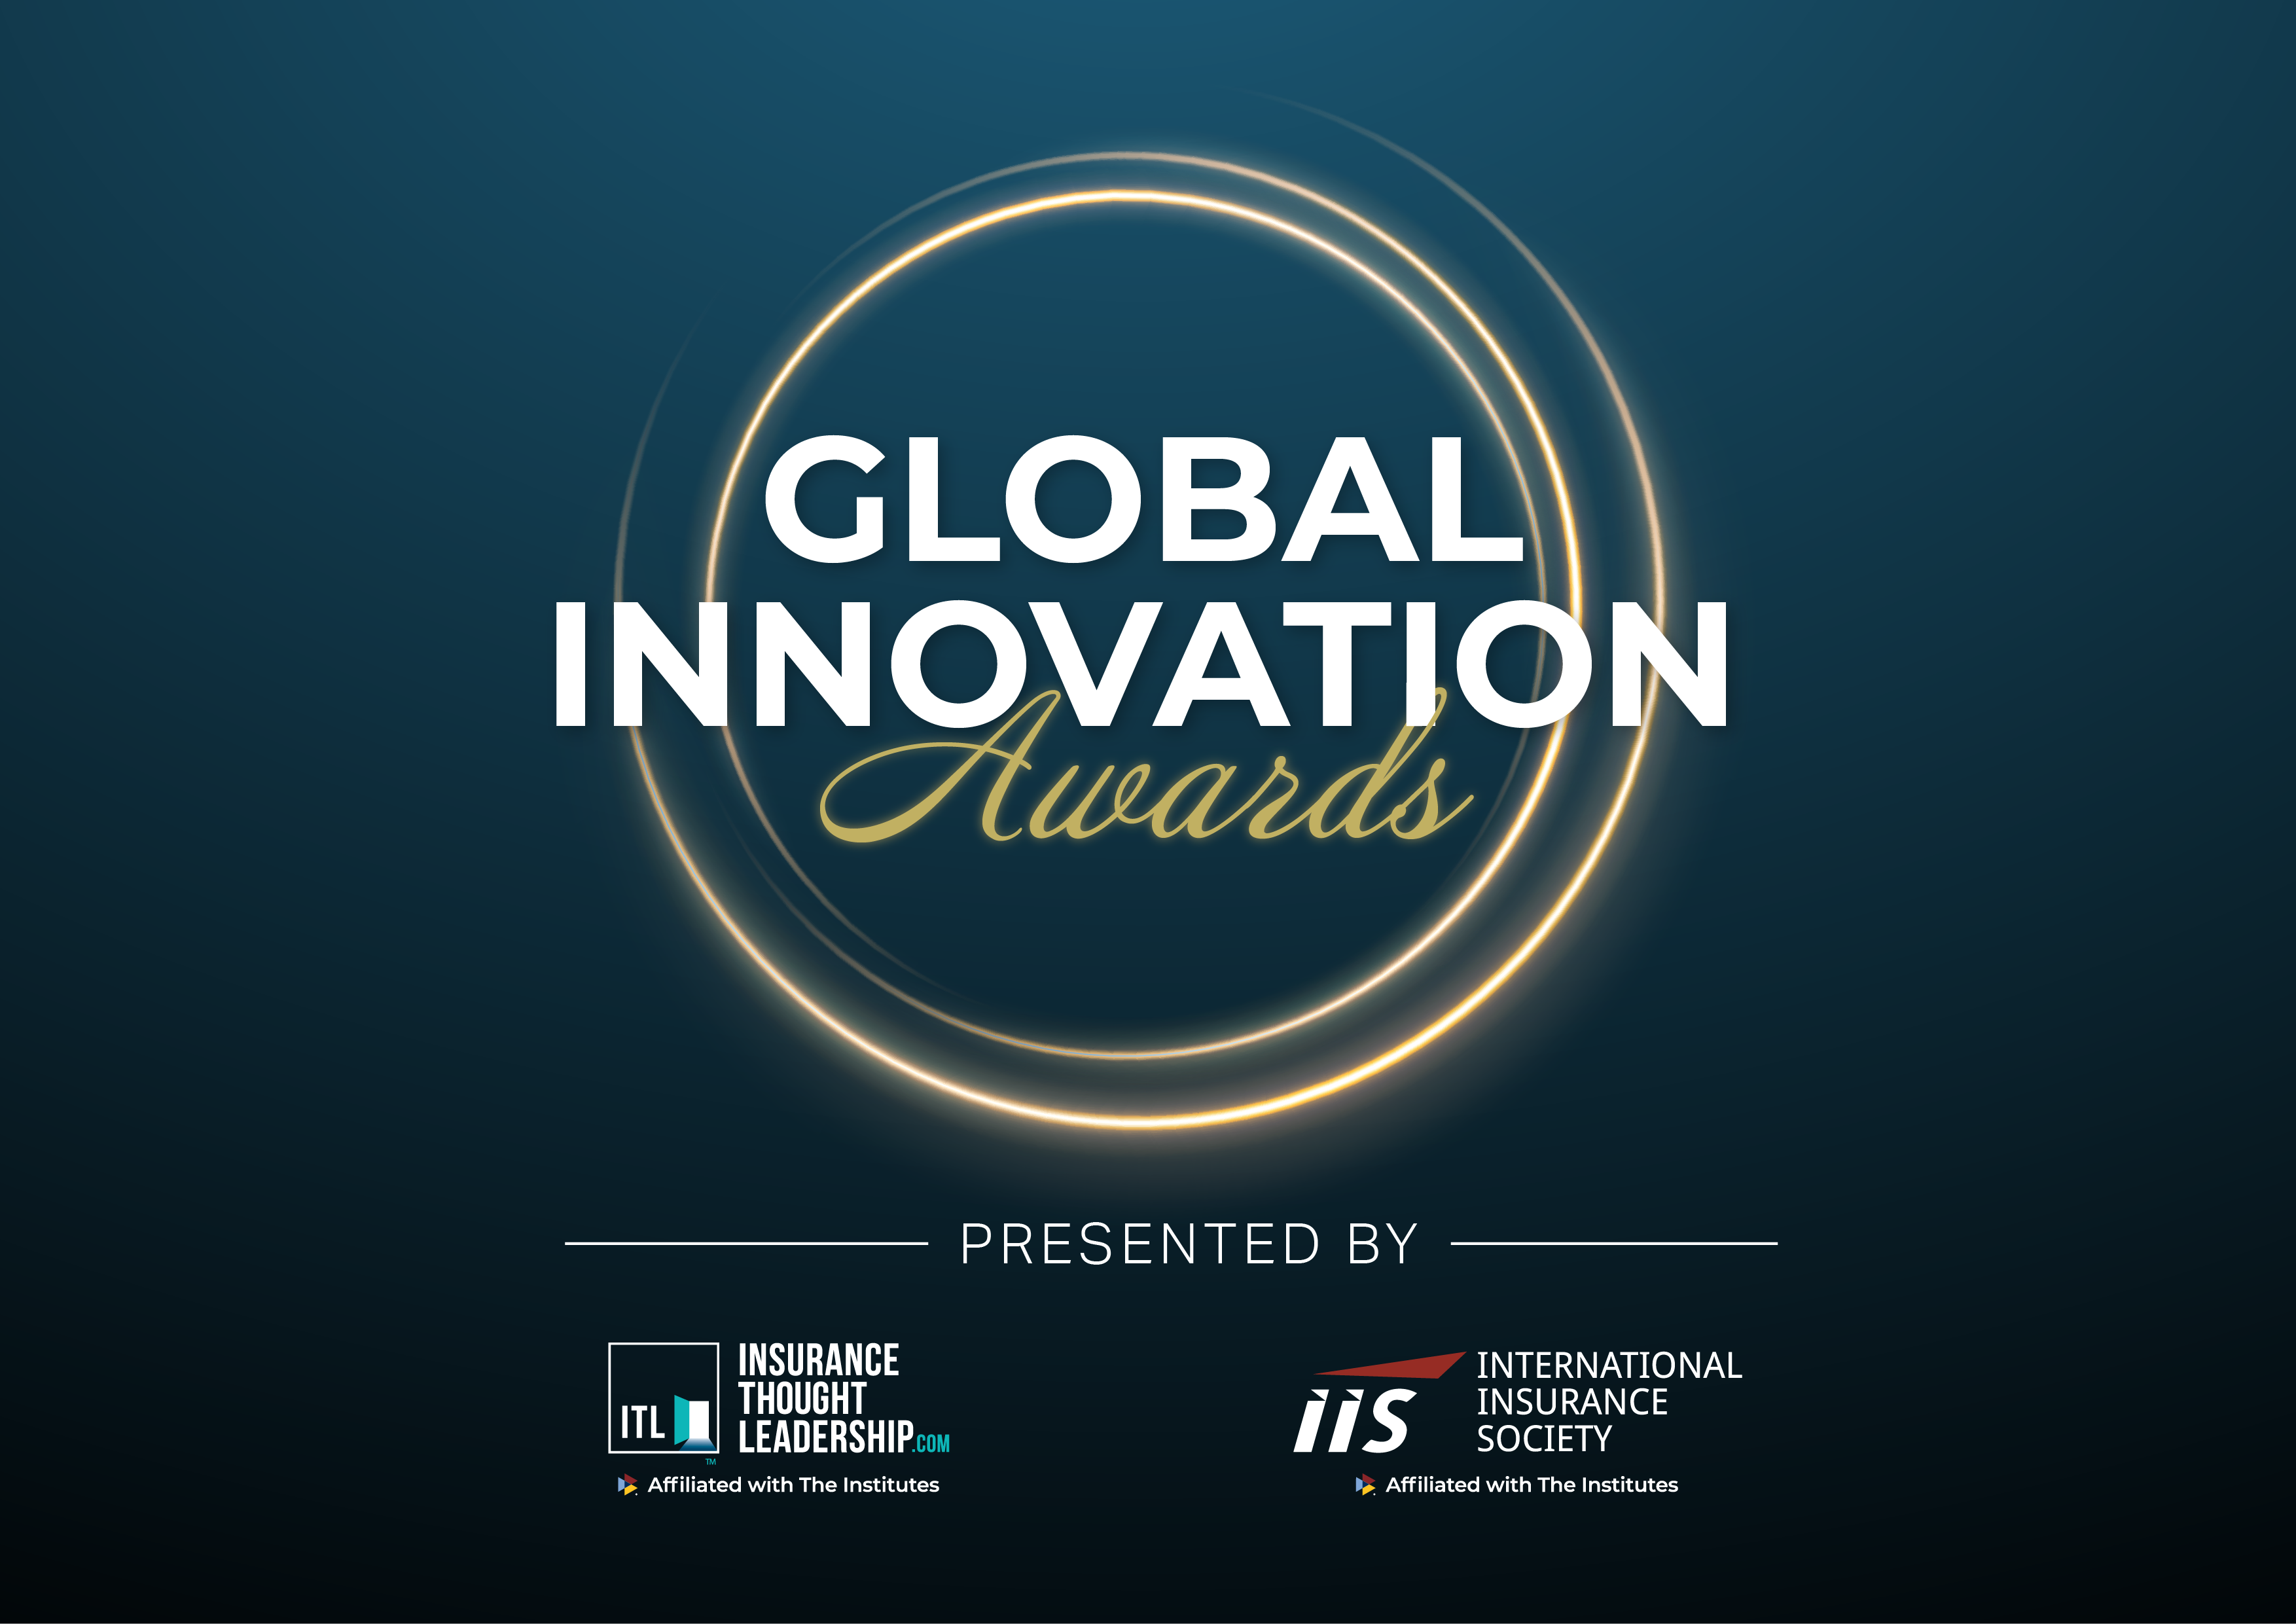 Global Innovation Awards - BAI